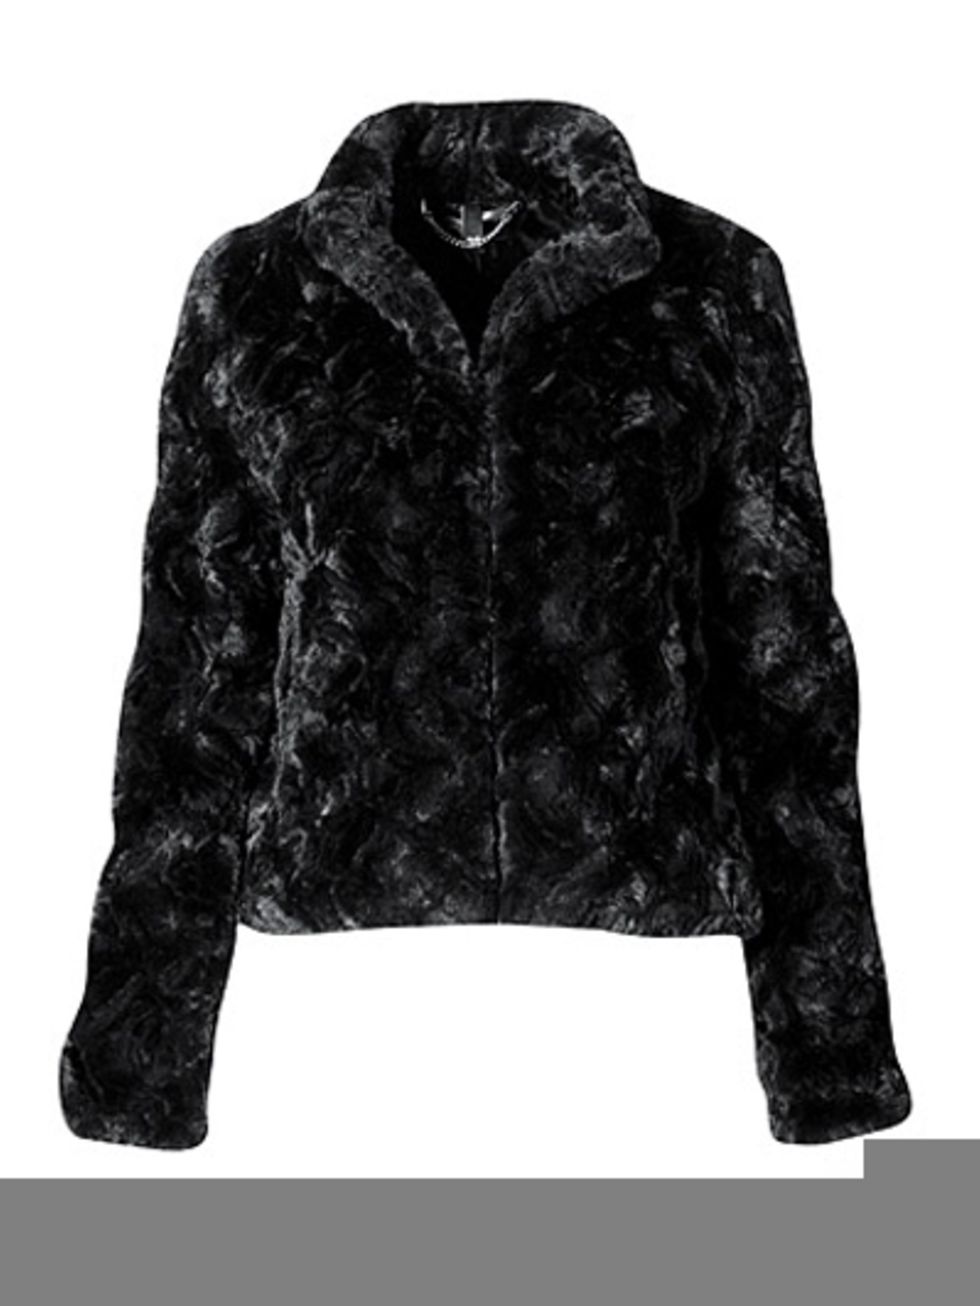 Sleeve, Textile, Outerwear, Collar, Jacket, Black, Natural material, Fur, Fashion design, Fur clothing, 